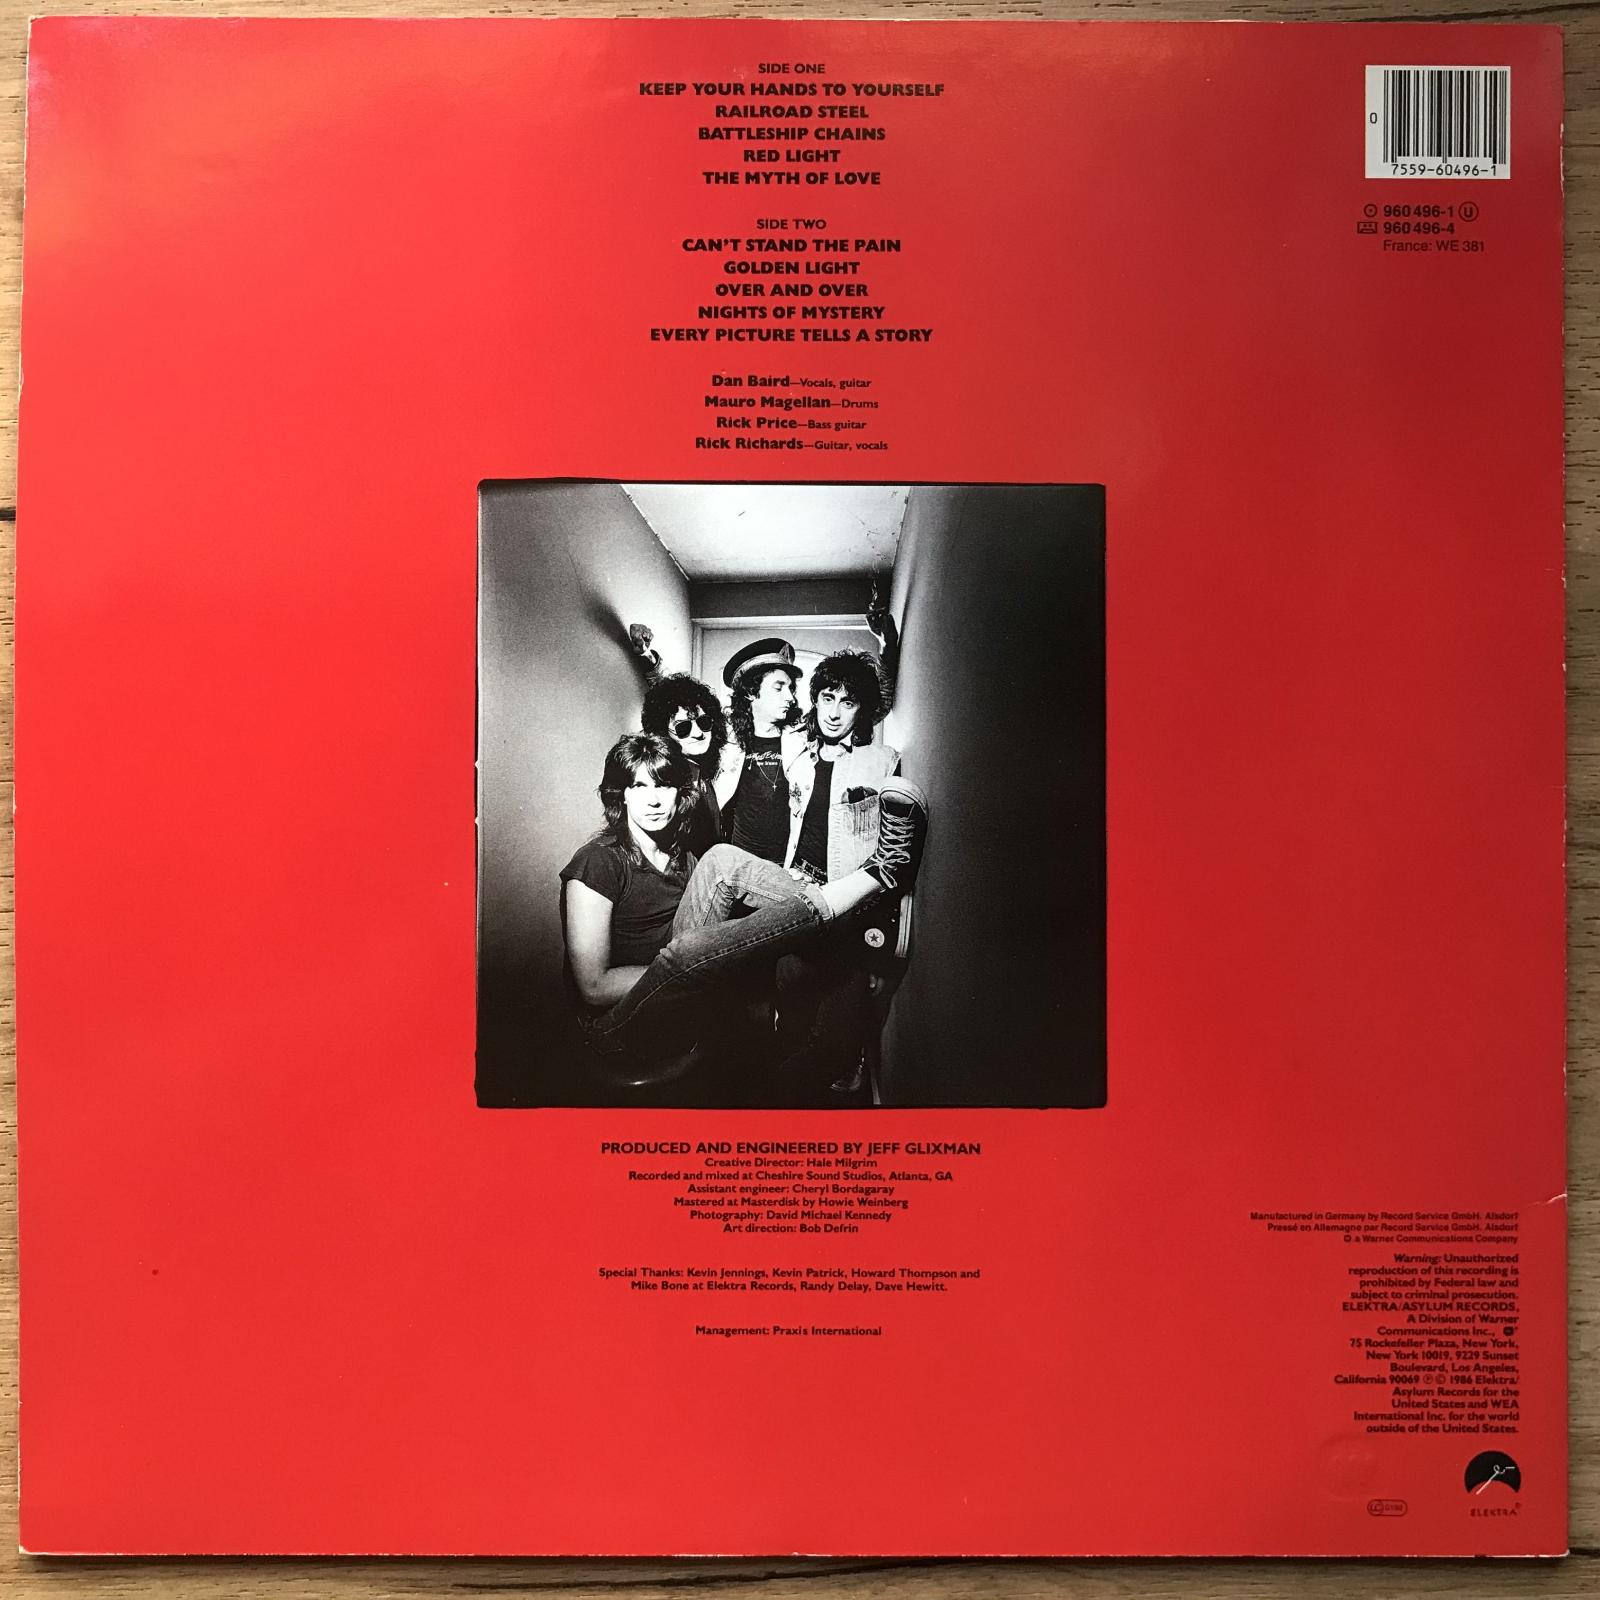 GEORGIA SATELITES Same GER VG+ ELEKTRA - LP / Vinylové desky